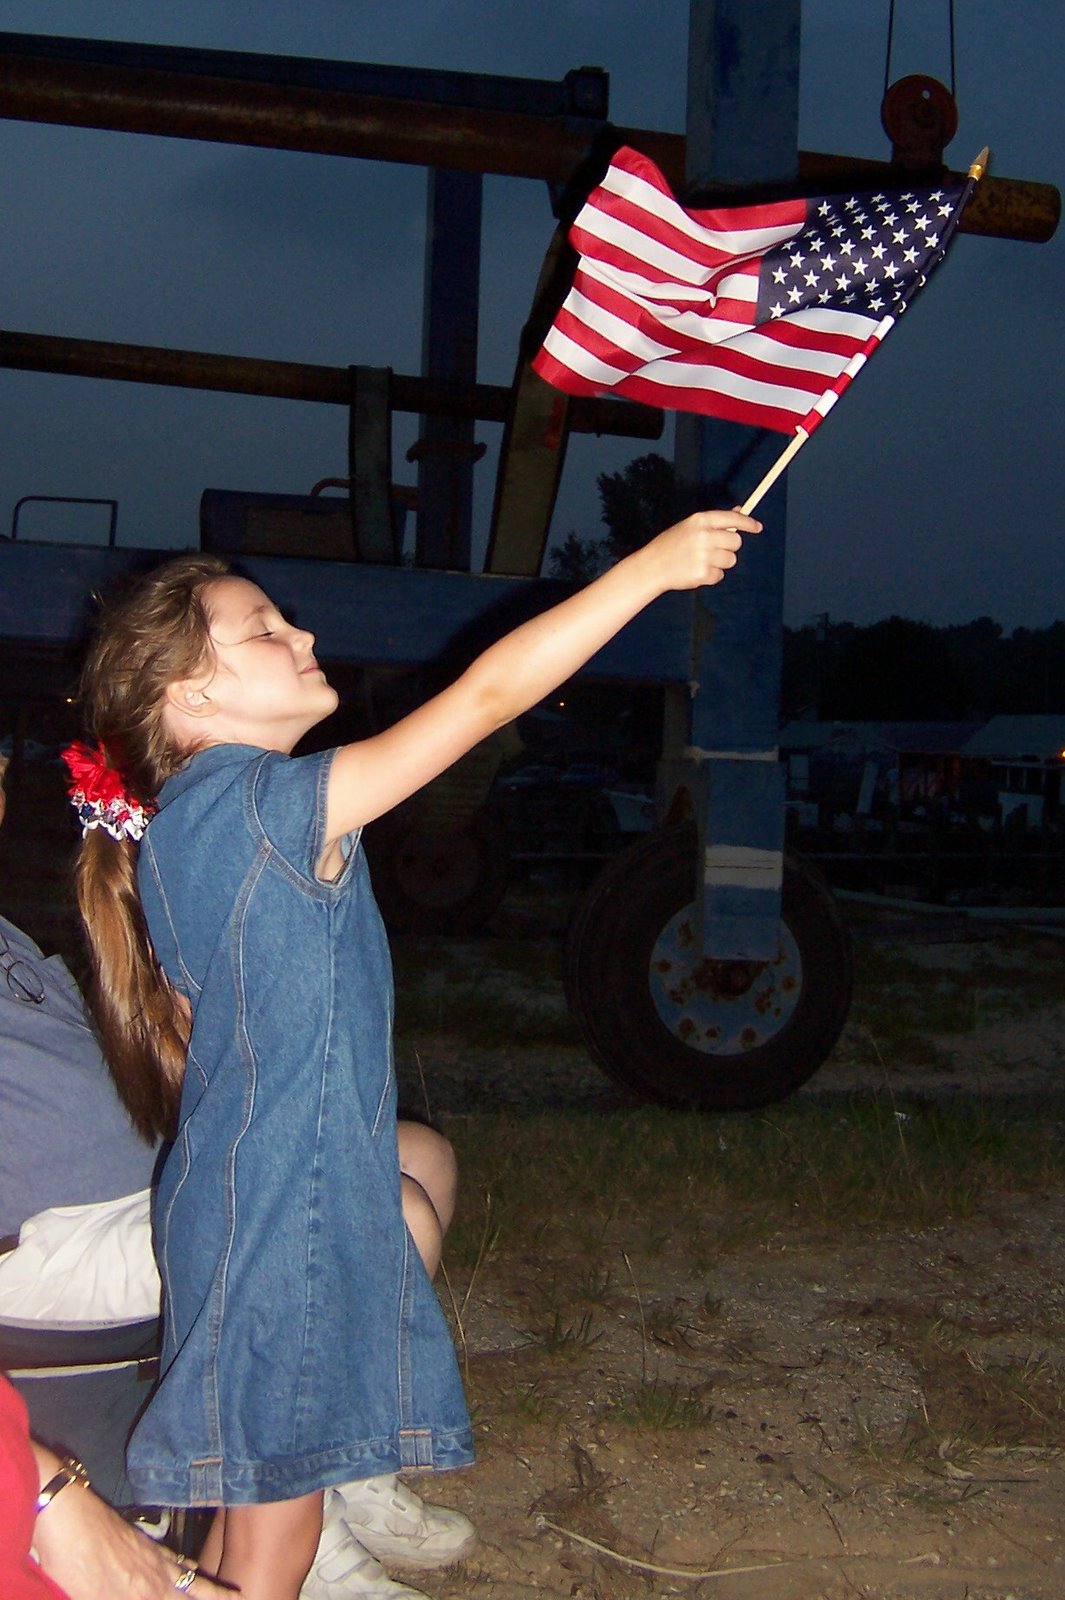 [Emma+and+Flag+2004.jpg]